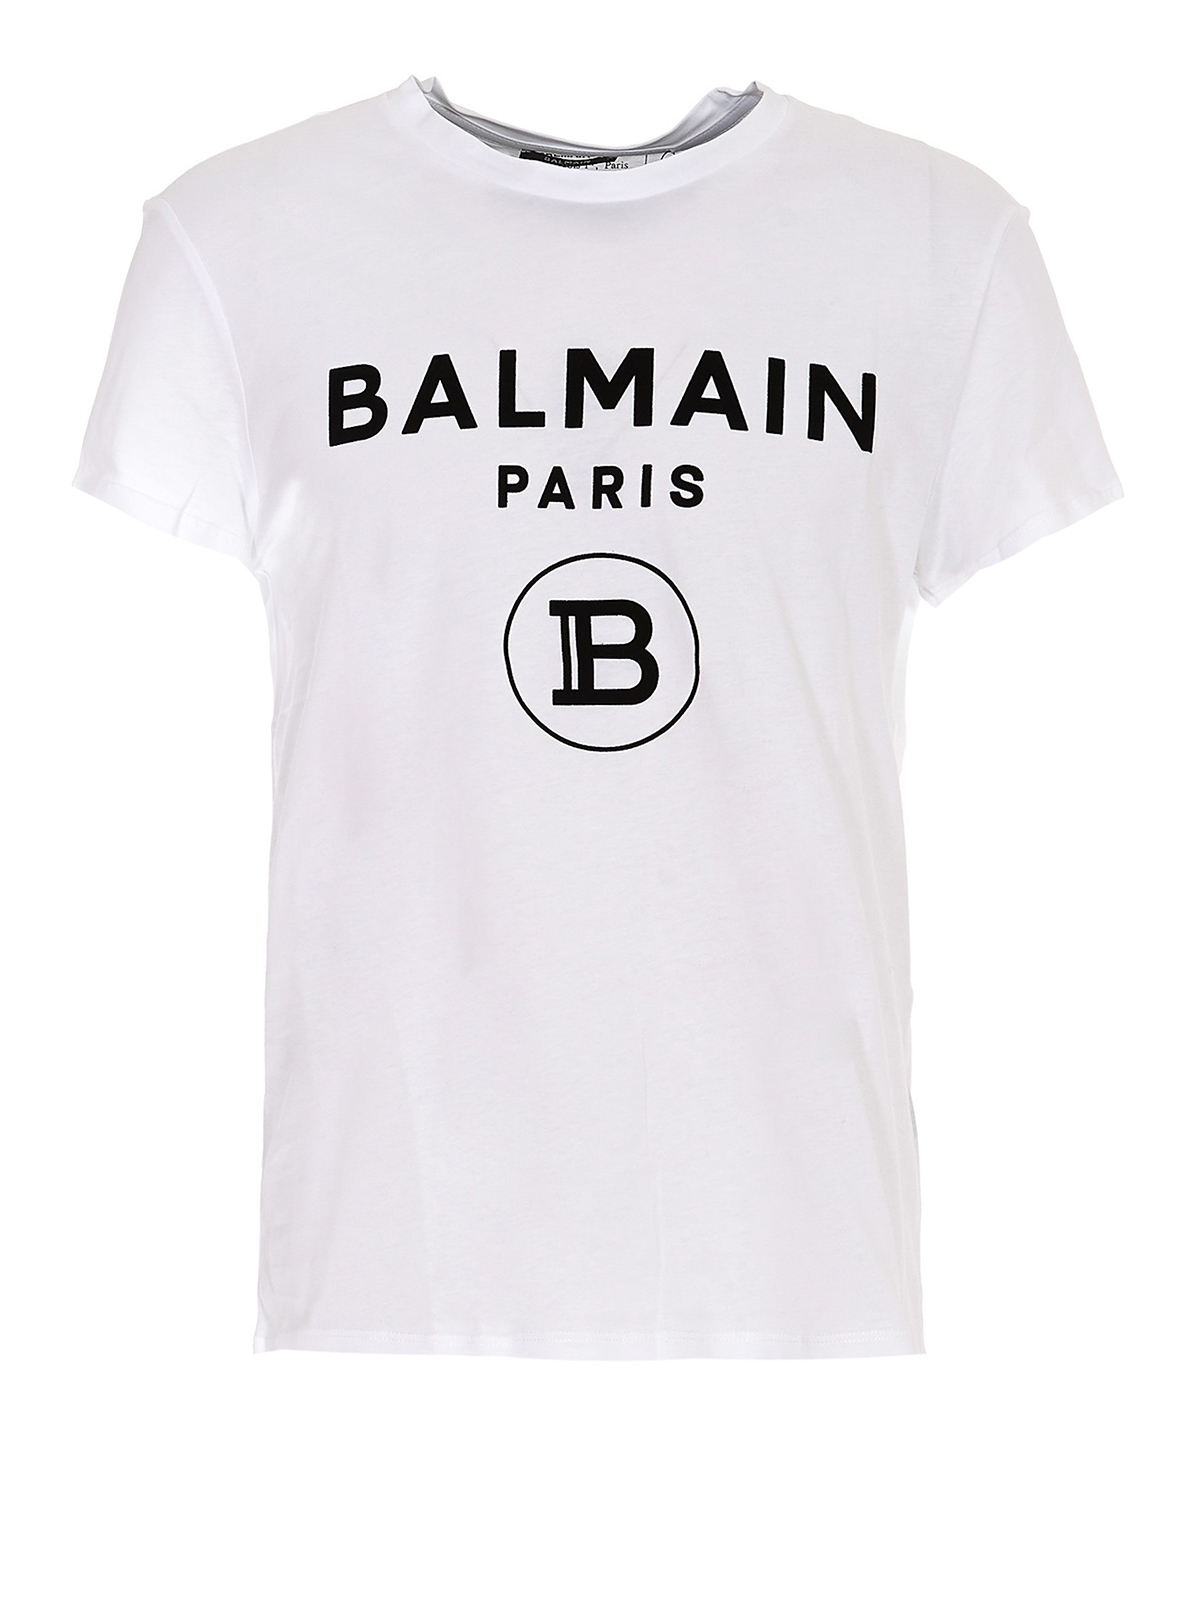 T-shirts Balmain - Balmain Paris logo T-shirt - TH11601I2450FA | iKRIX.com